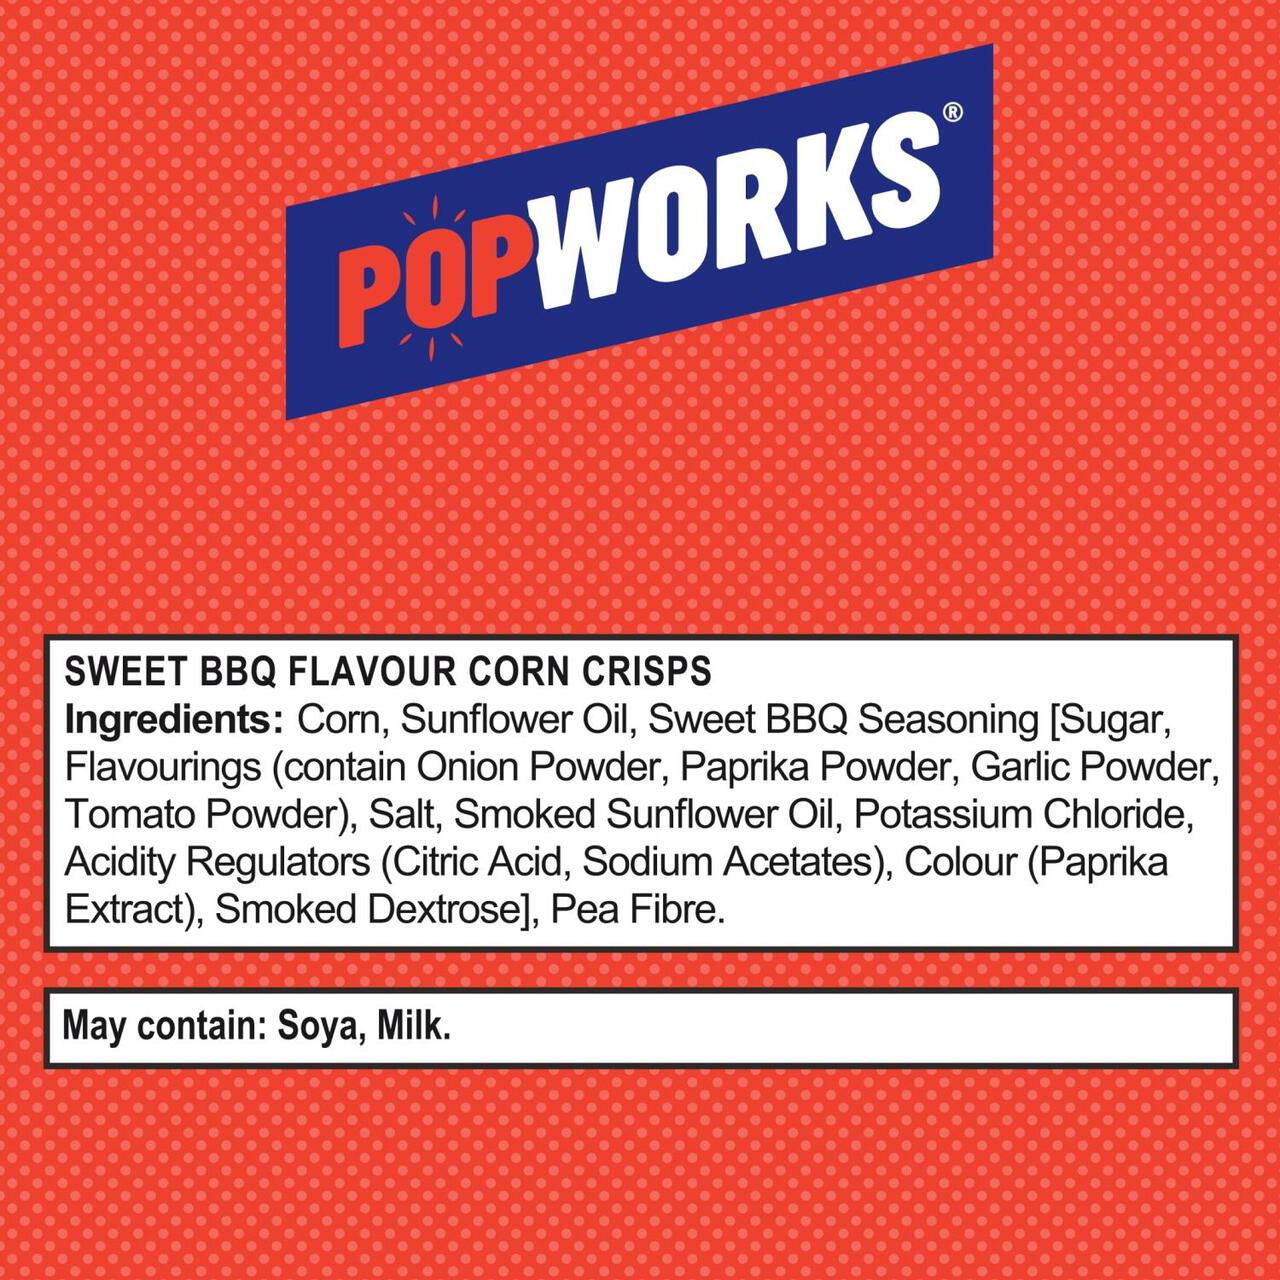 Popworks Sweet BBQ Sharing Popped Crisps 85g